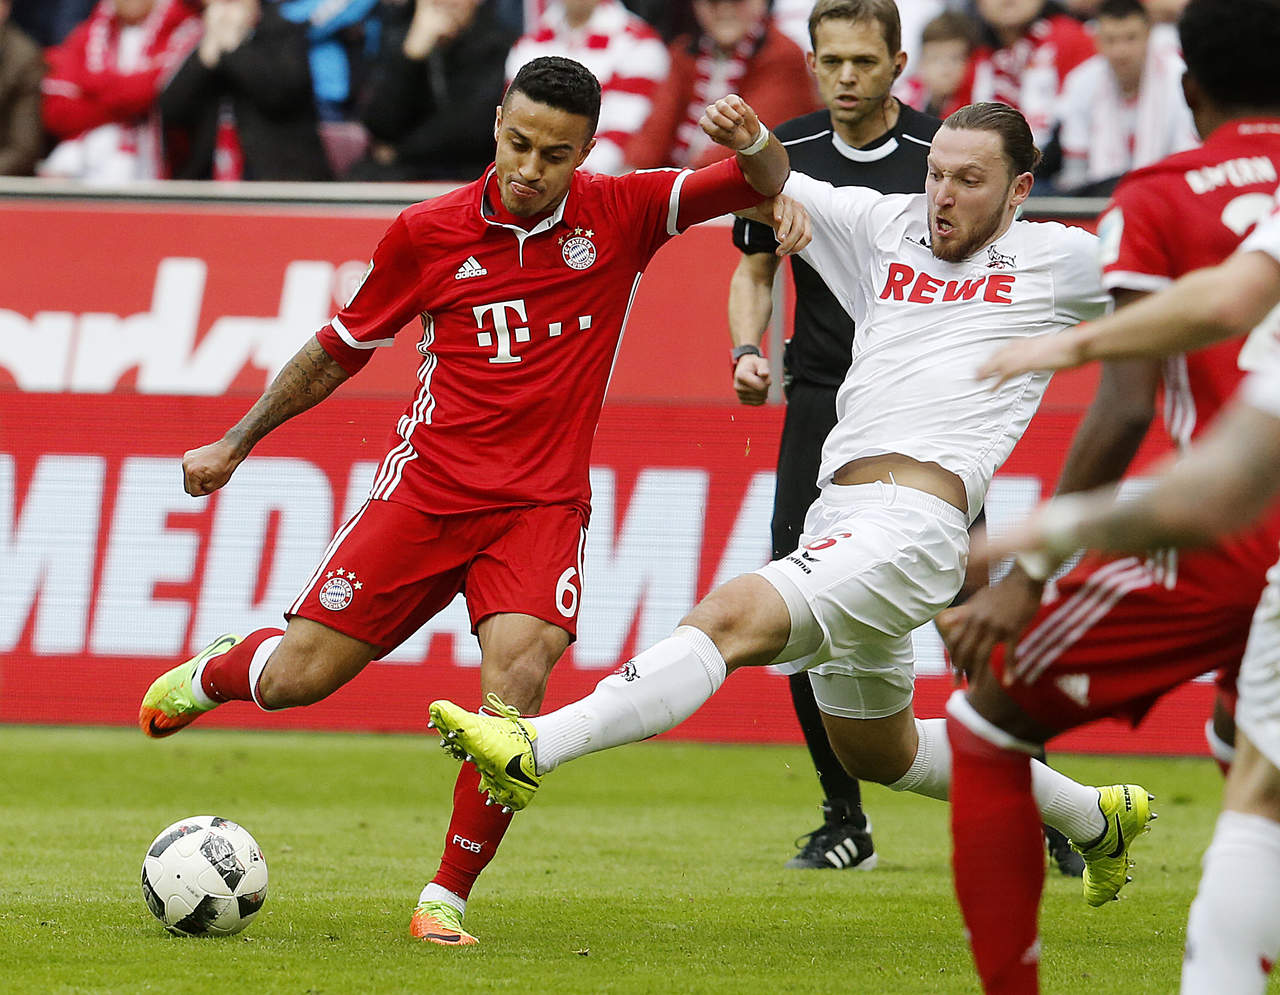 Bayern Munich derrotó 3-0 al Colonia y llegó a 56 puntos, ya le saca 7 unidades al Leipzig, segundo lugar del torneo. (AP)